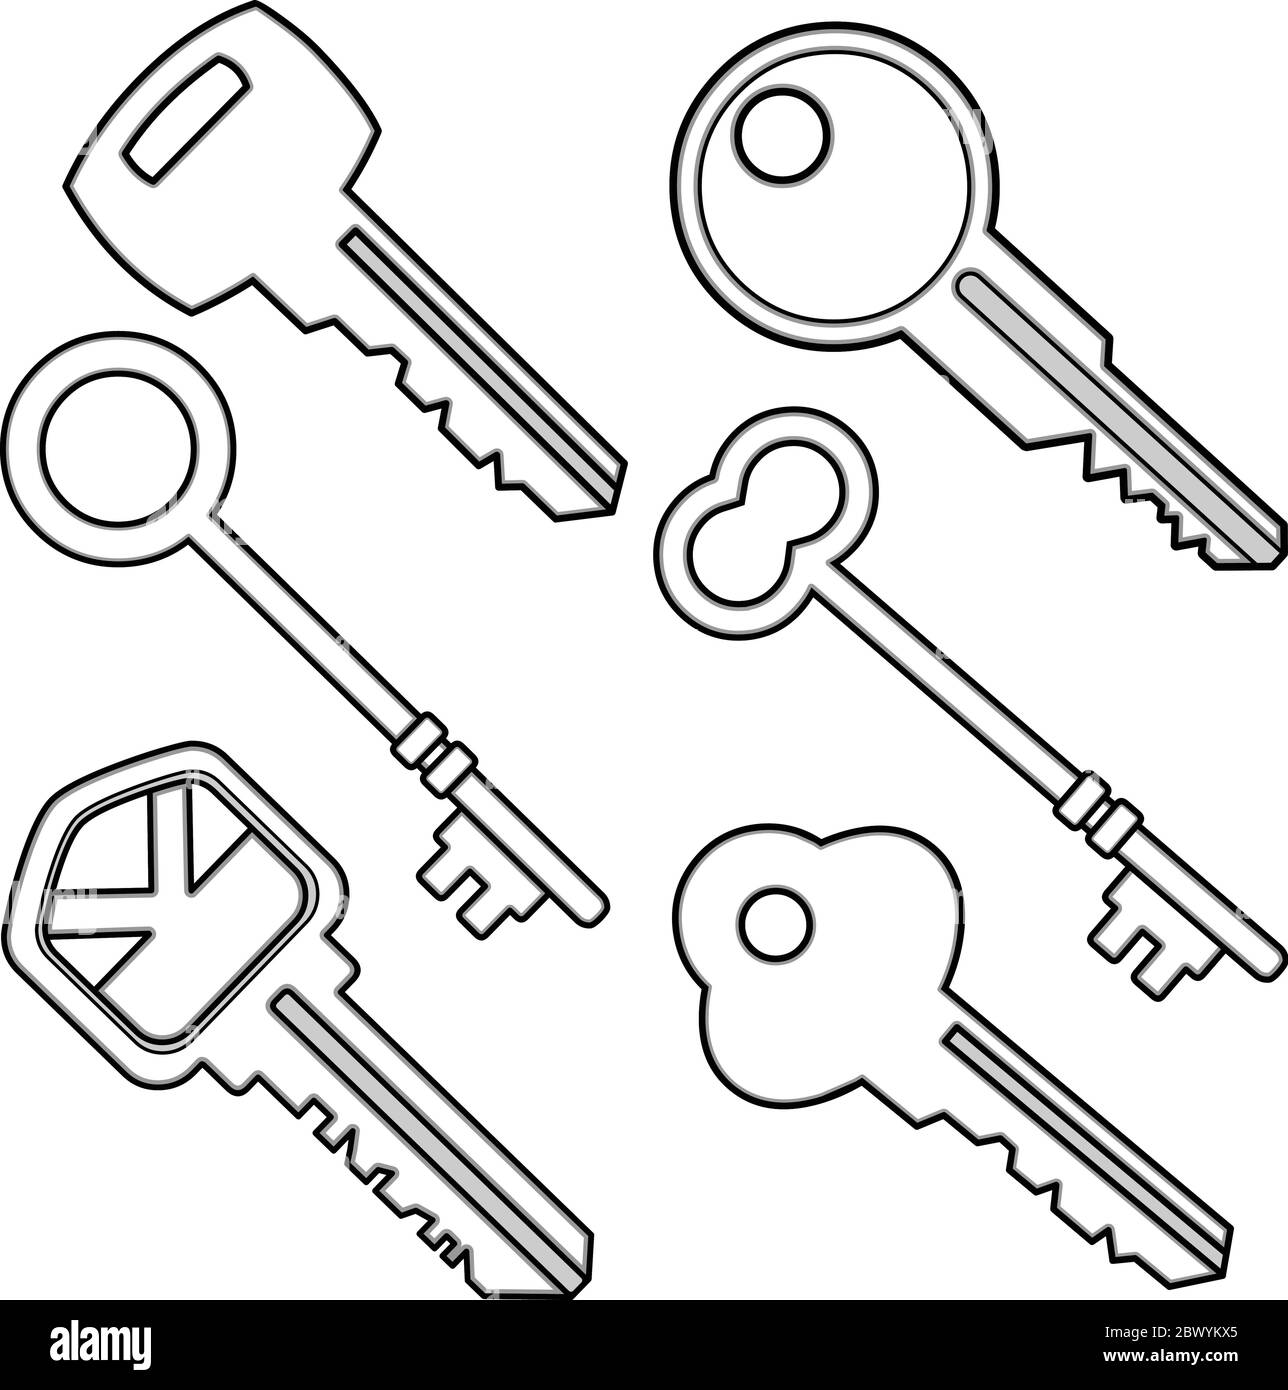 types of keys clipart